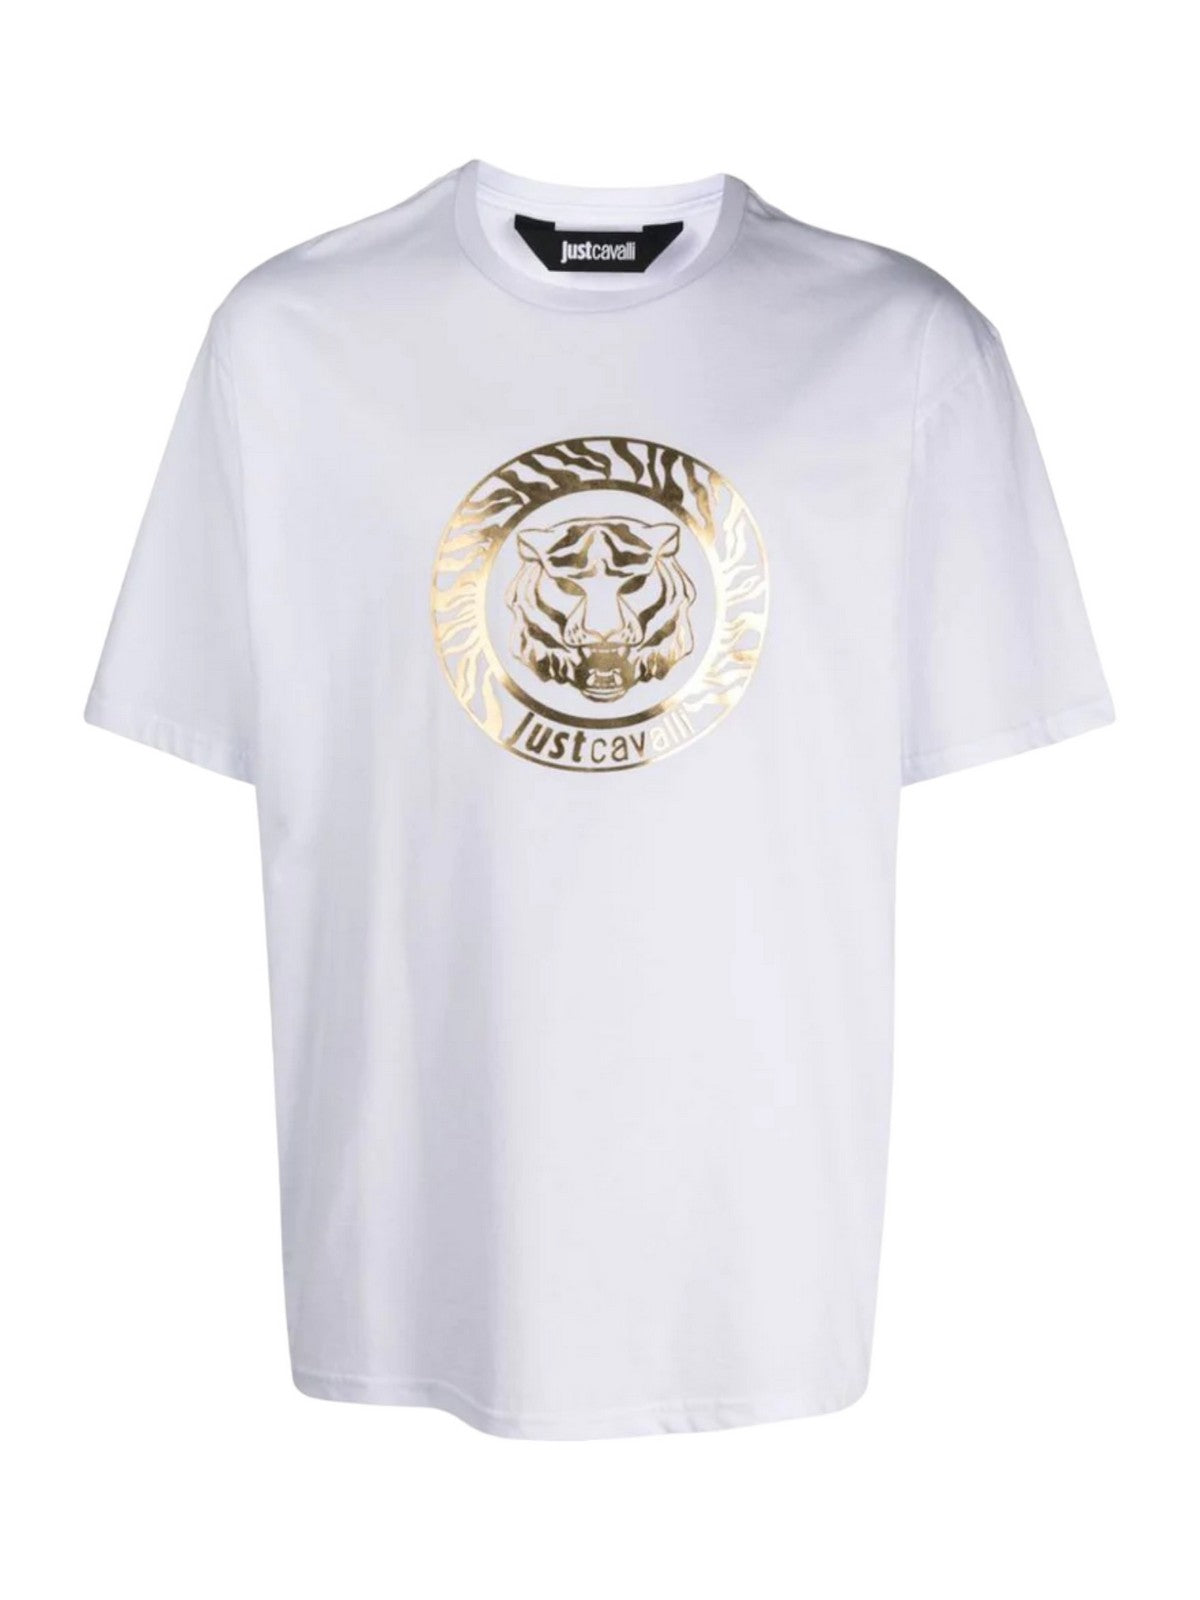 JUST CAVALLI T-Shirt e Polo Uomo  75OAHT01 CJ500 G03 Bianco